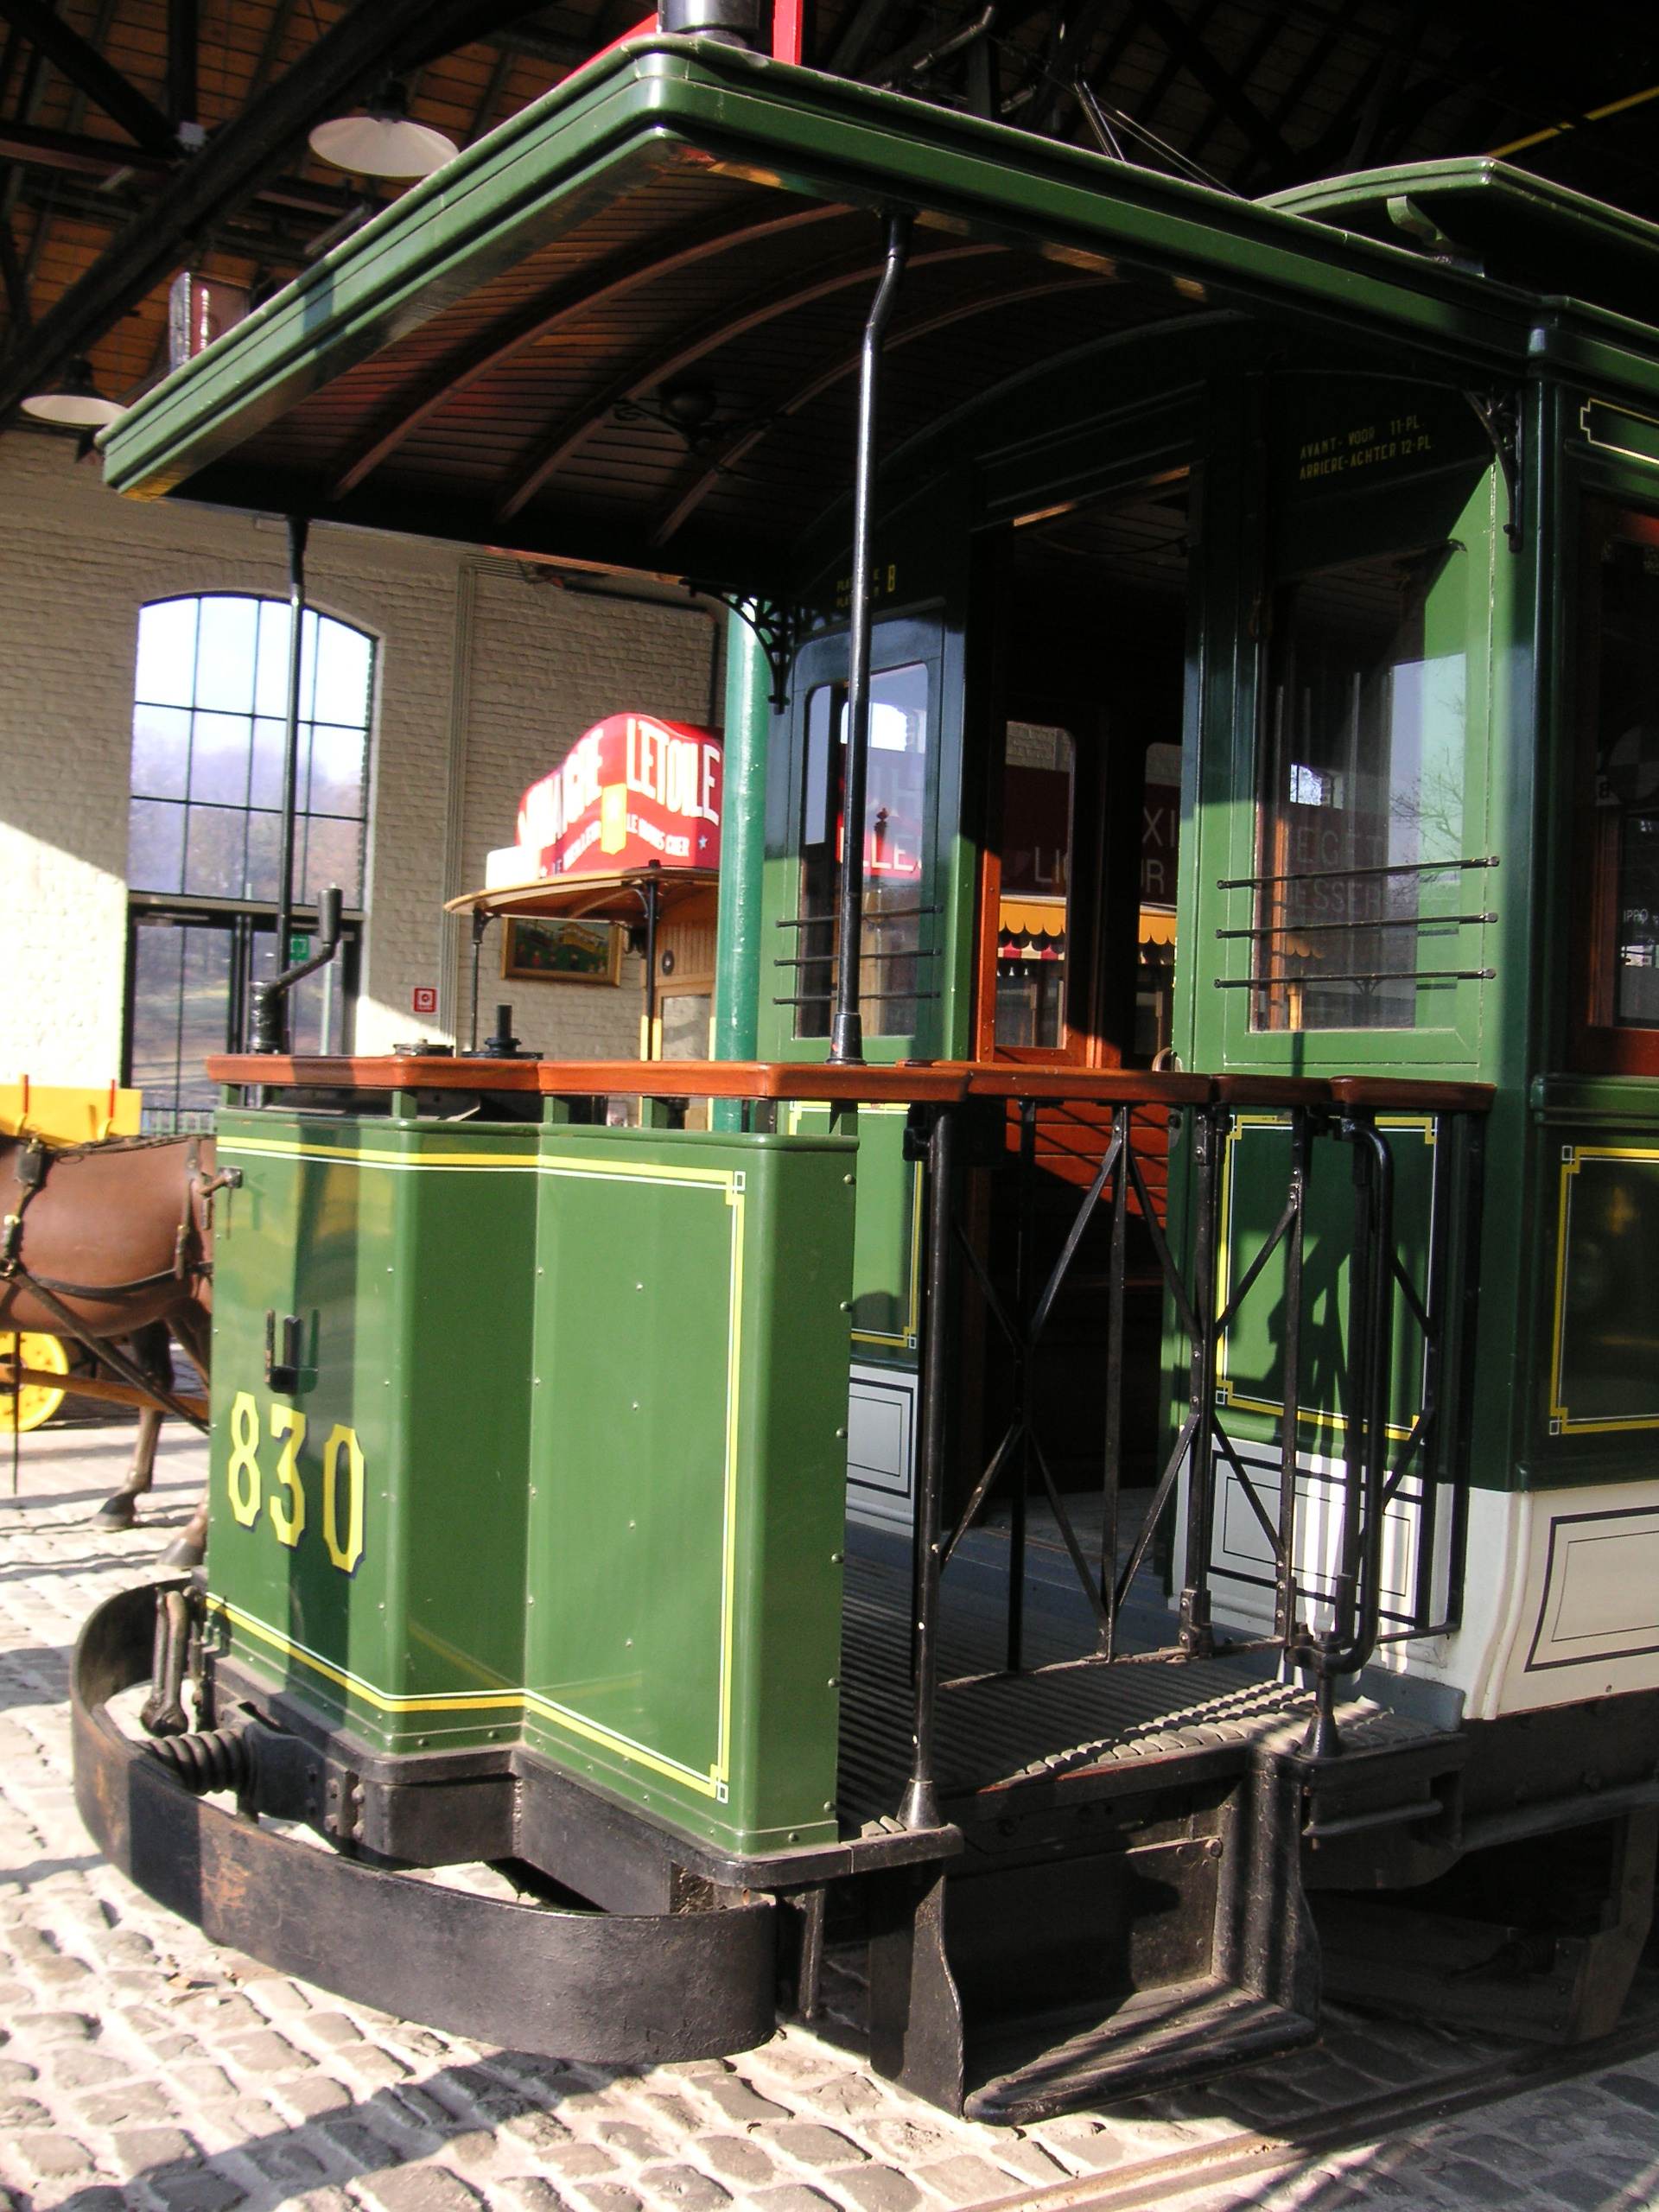 Musée du Tram (Musée du Transport Urbain Bruxellois)